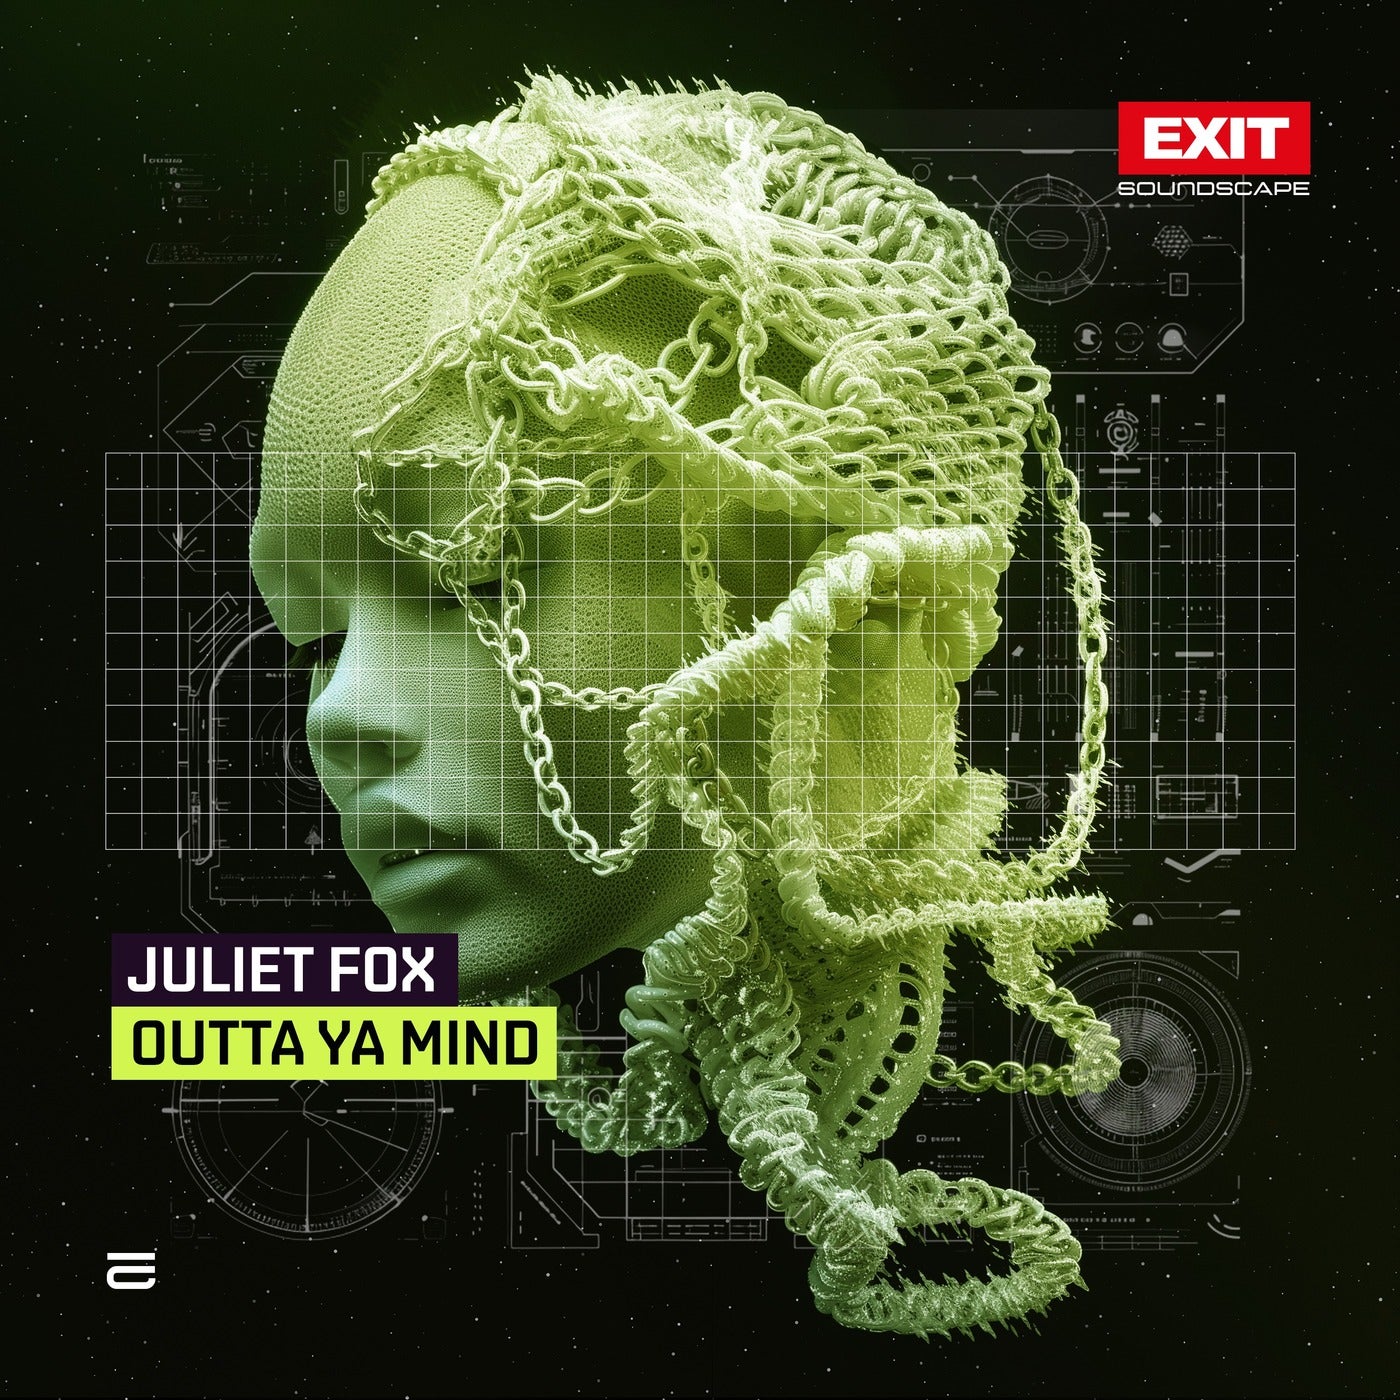 Juliet Fox steps up on EXIT Soundscape with new single ‘Outta Ya Mind’